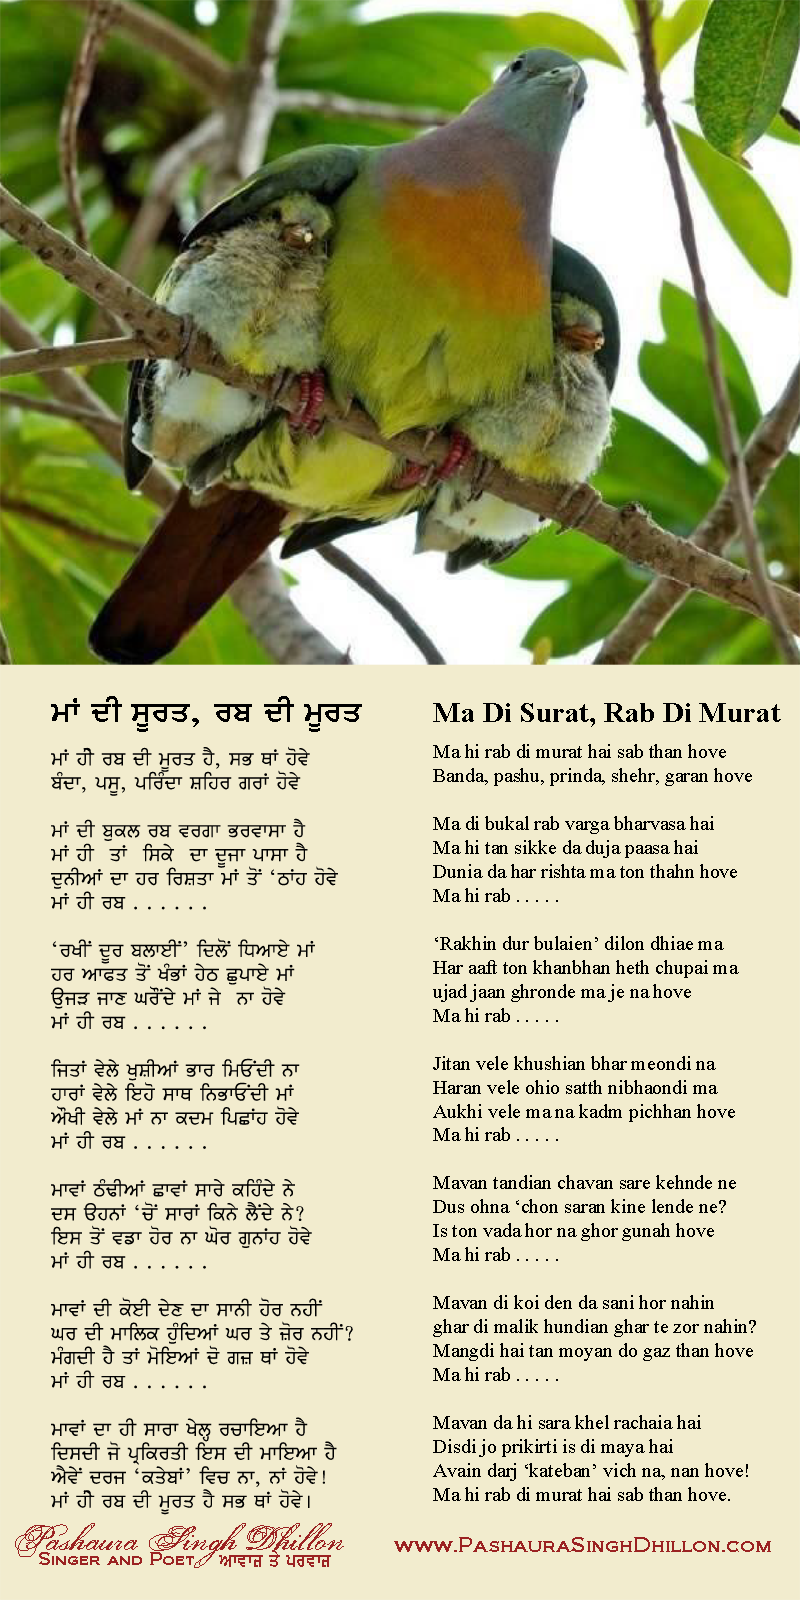 Nazm, “ਮਾਂ ਦੀ ਸੂਰਤ, ਰਬ ਦੀ ਮੂਰਤ,” Punjabi Poem, “Ma Di Surat, Rab Di Murat” (Gurmukhi/Romanized)